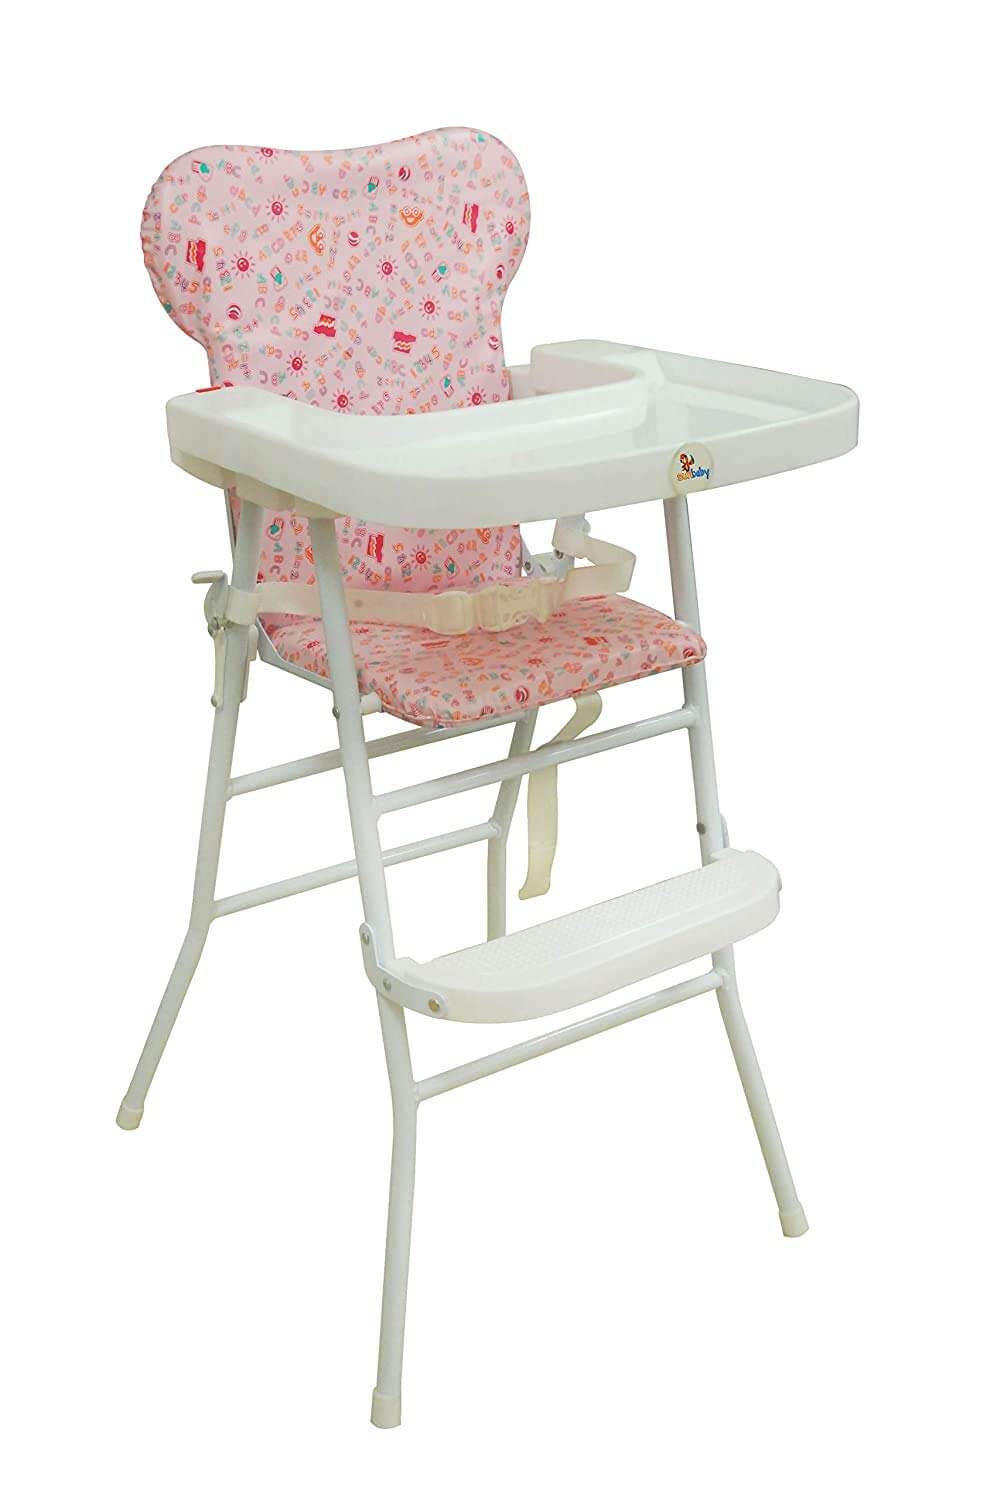 ORRIL Zoshomi Steelart Mealtime High Chair for Babies